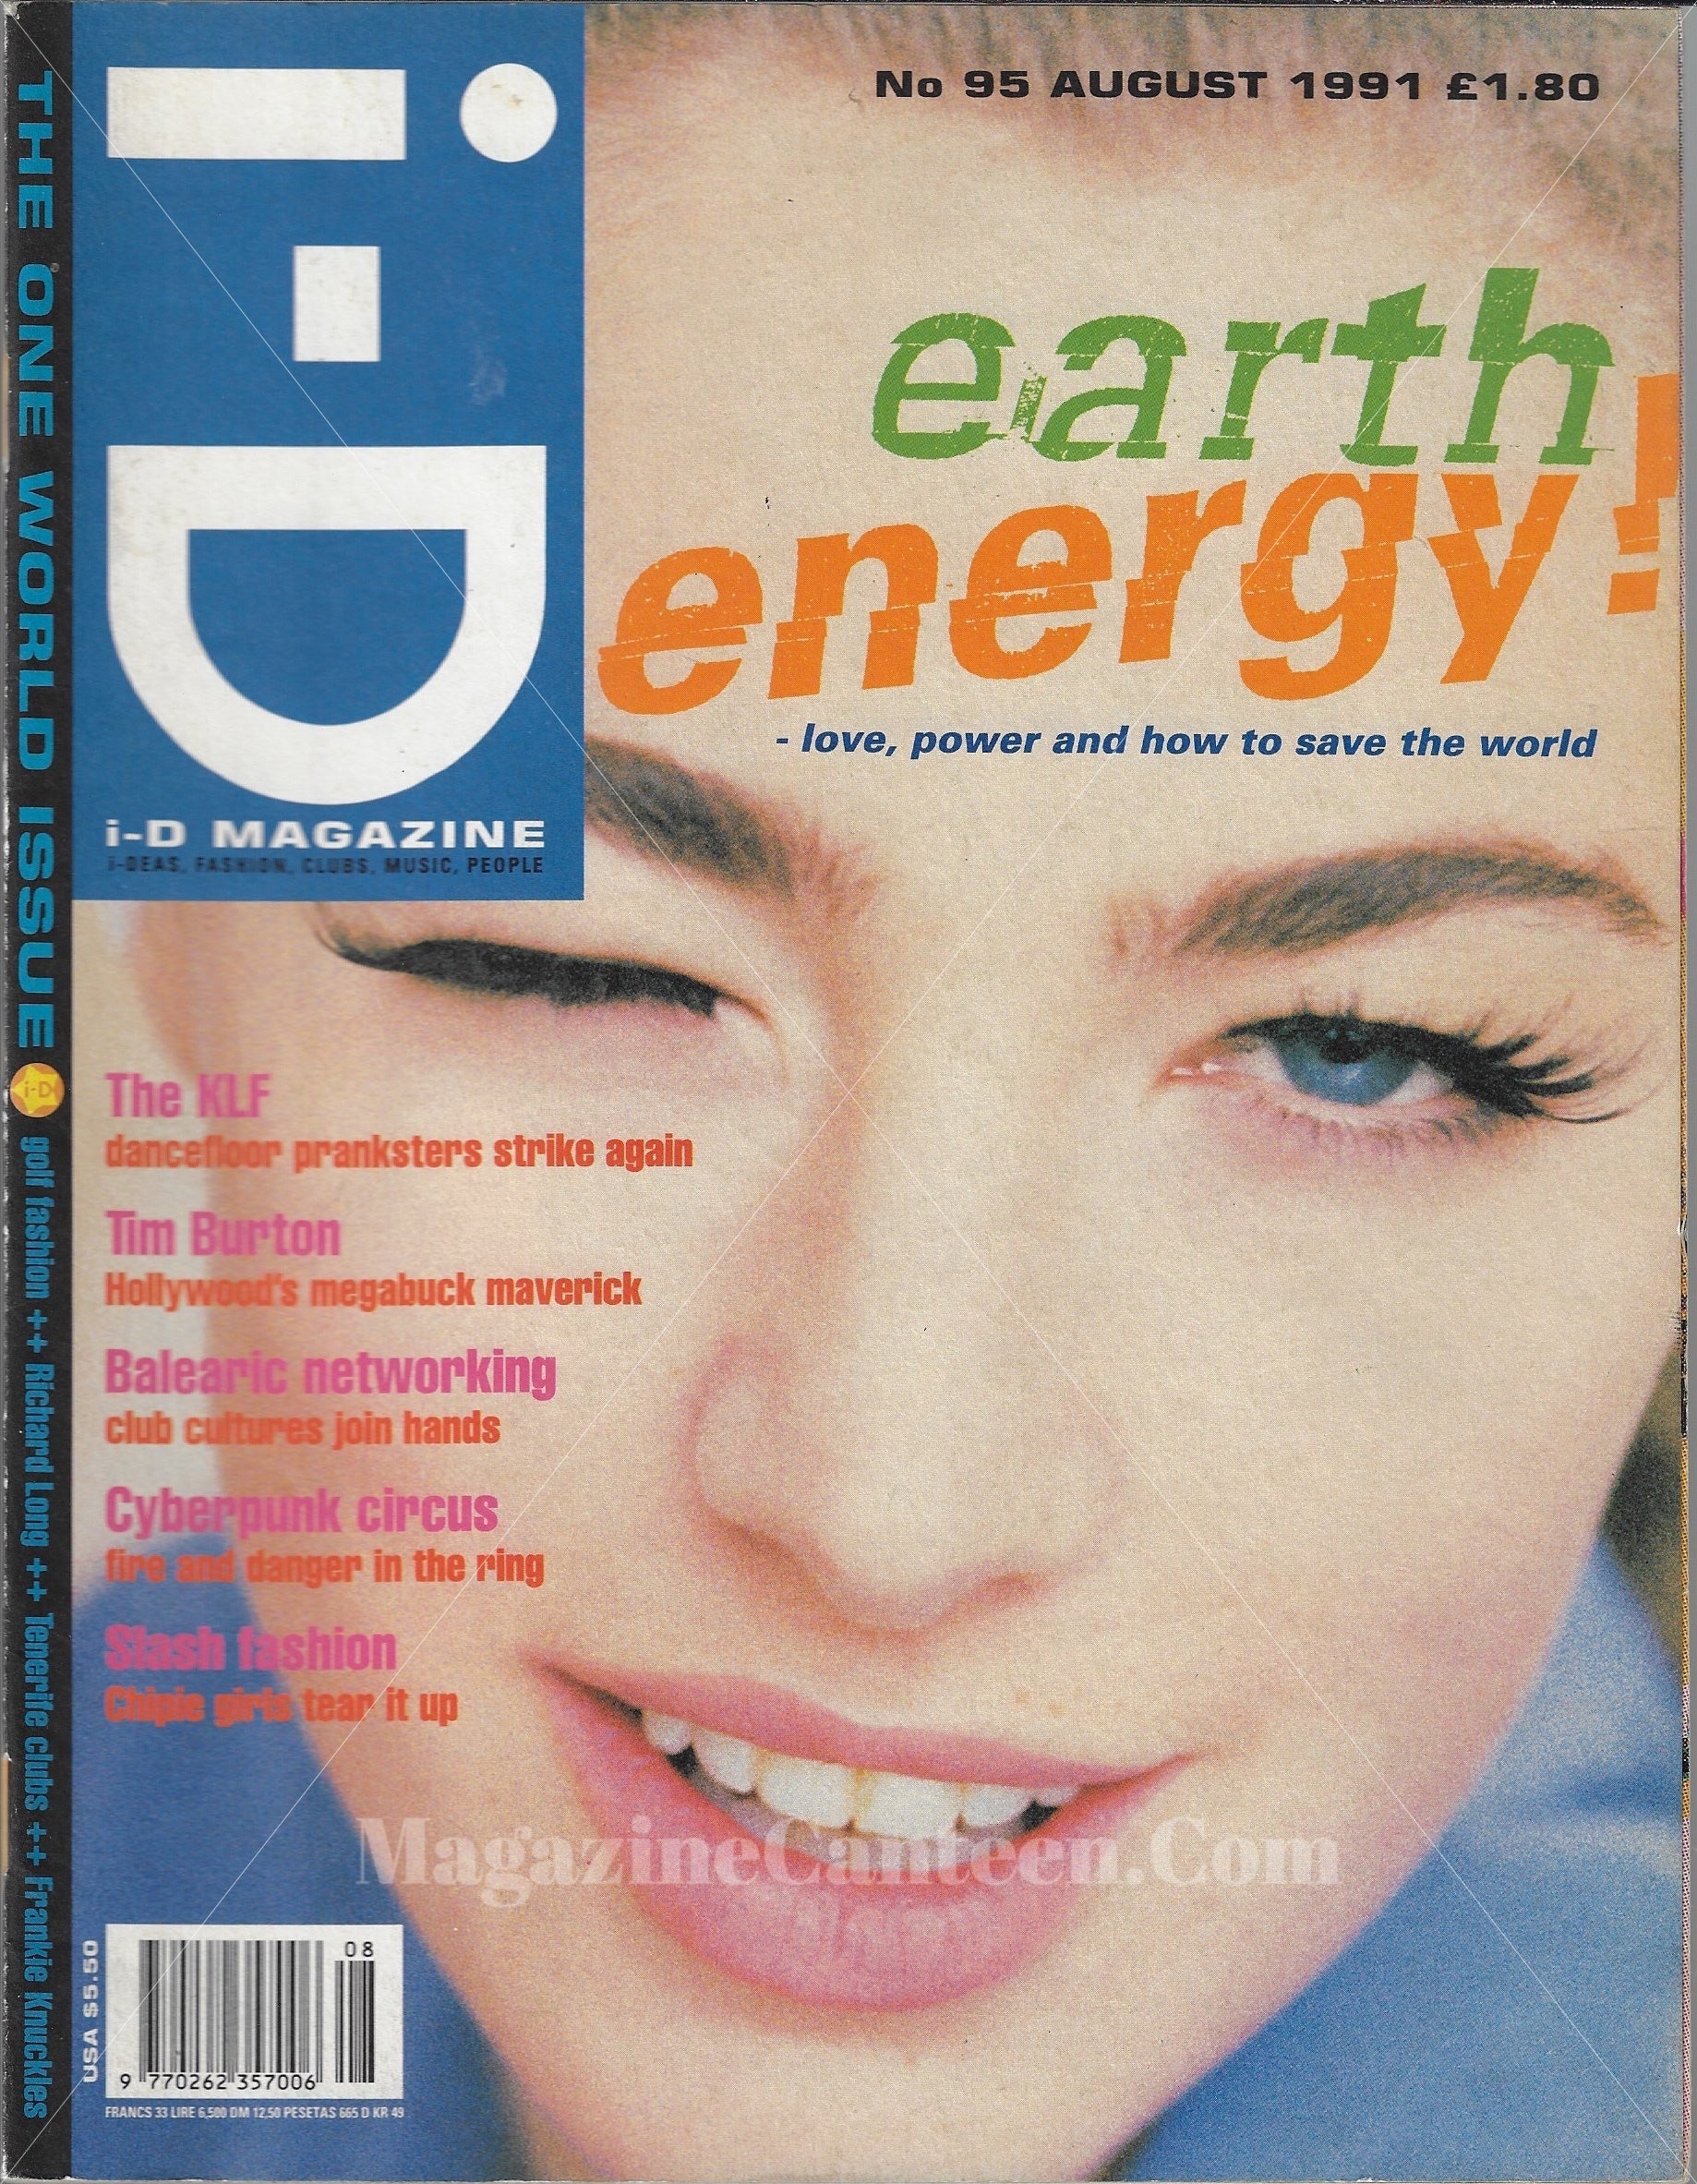 I-D Magazine 95 - Elaine Irwin 1991